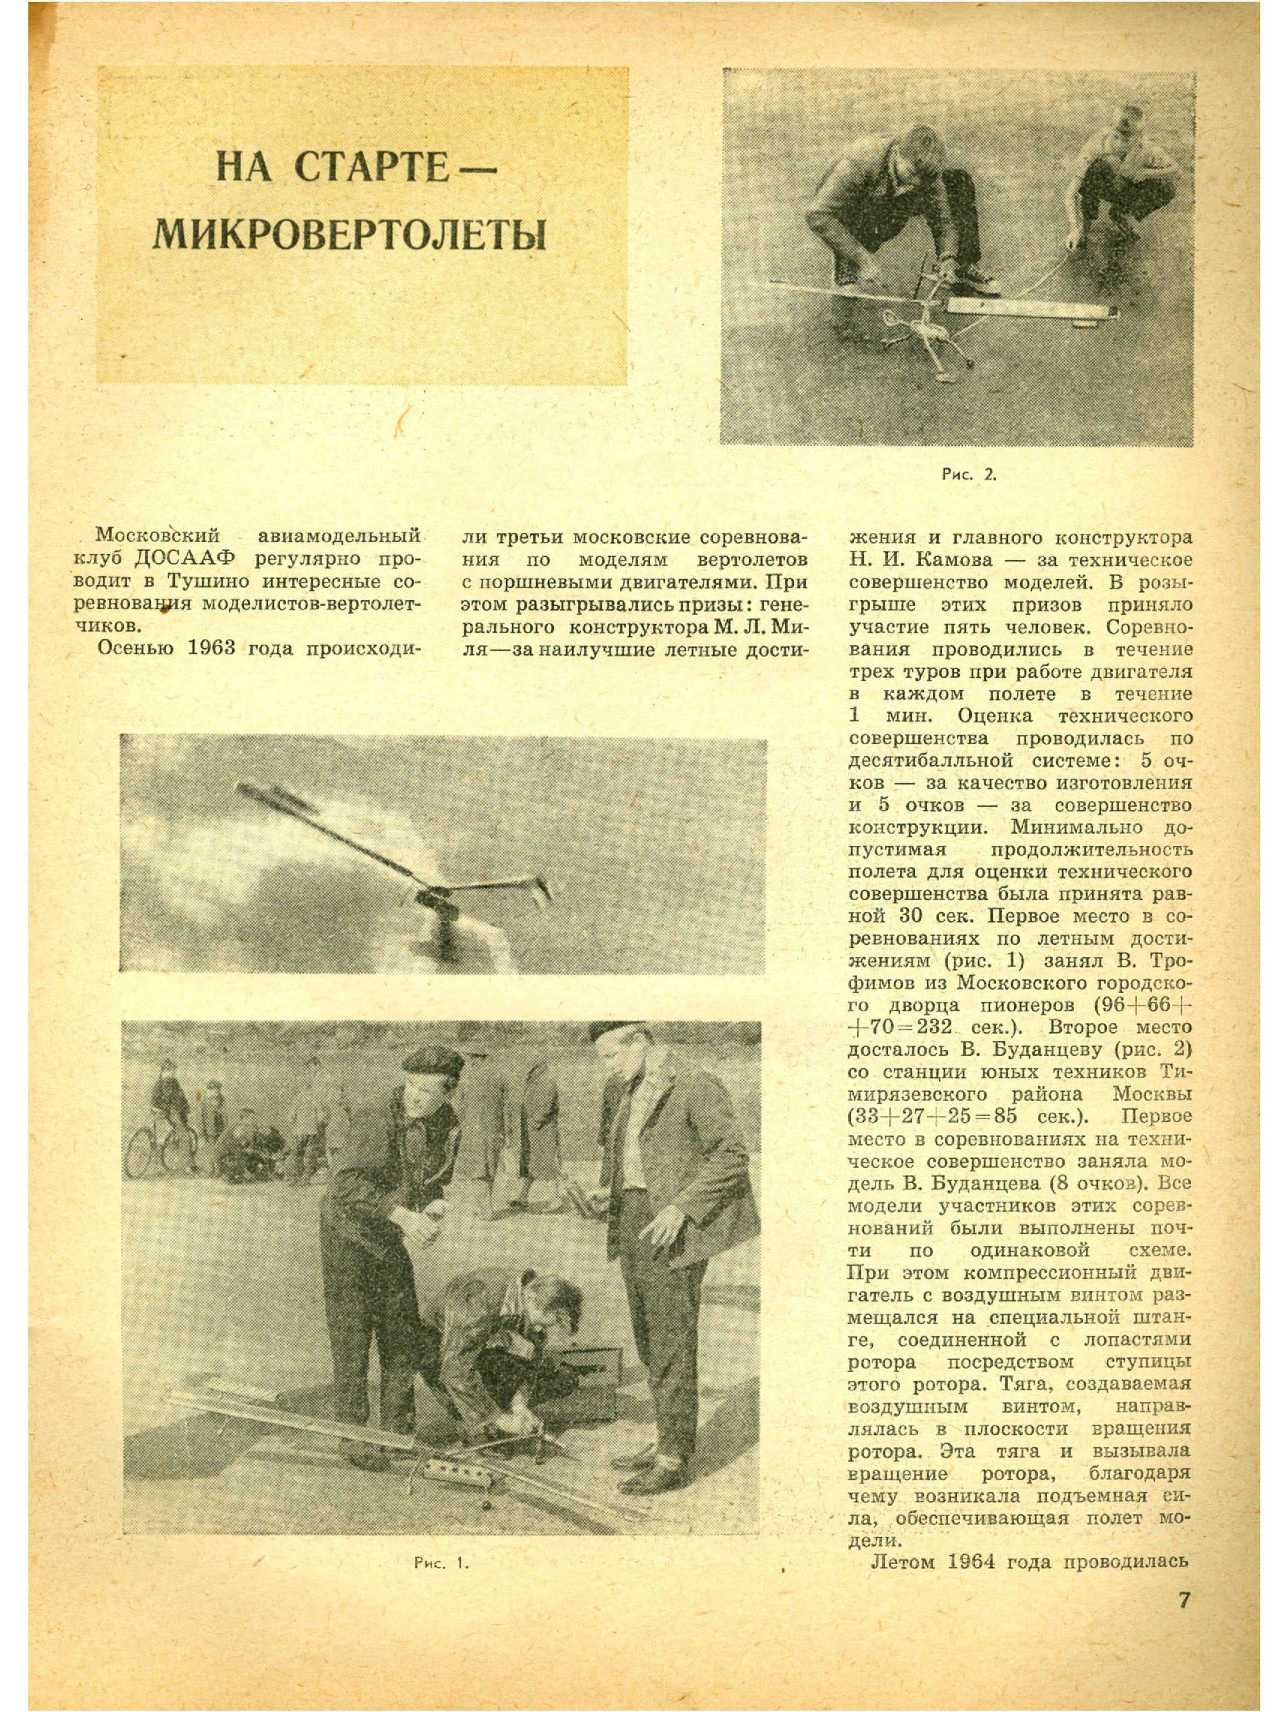 ЮМК 13, 1965, 7 c.